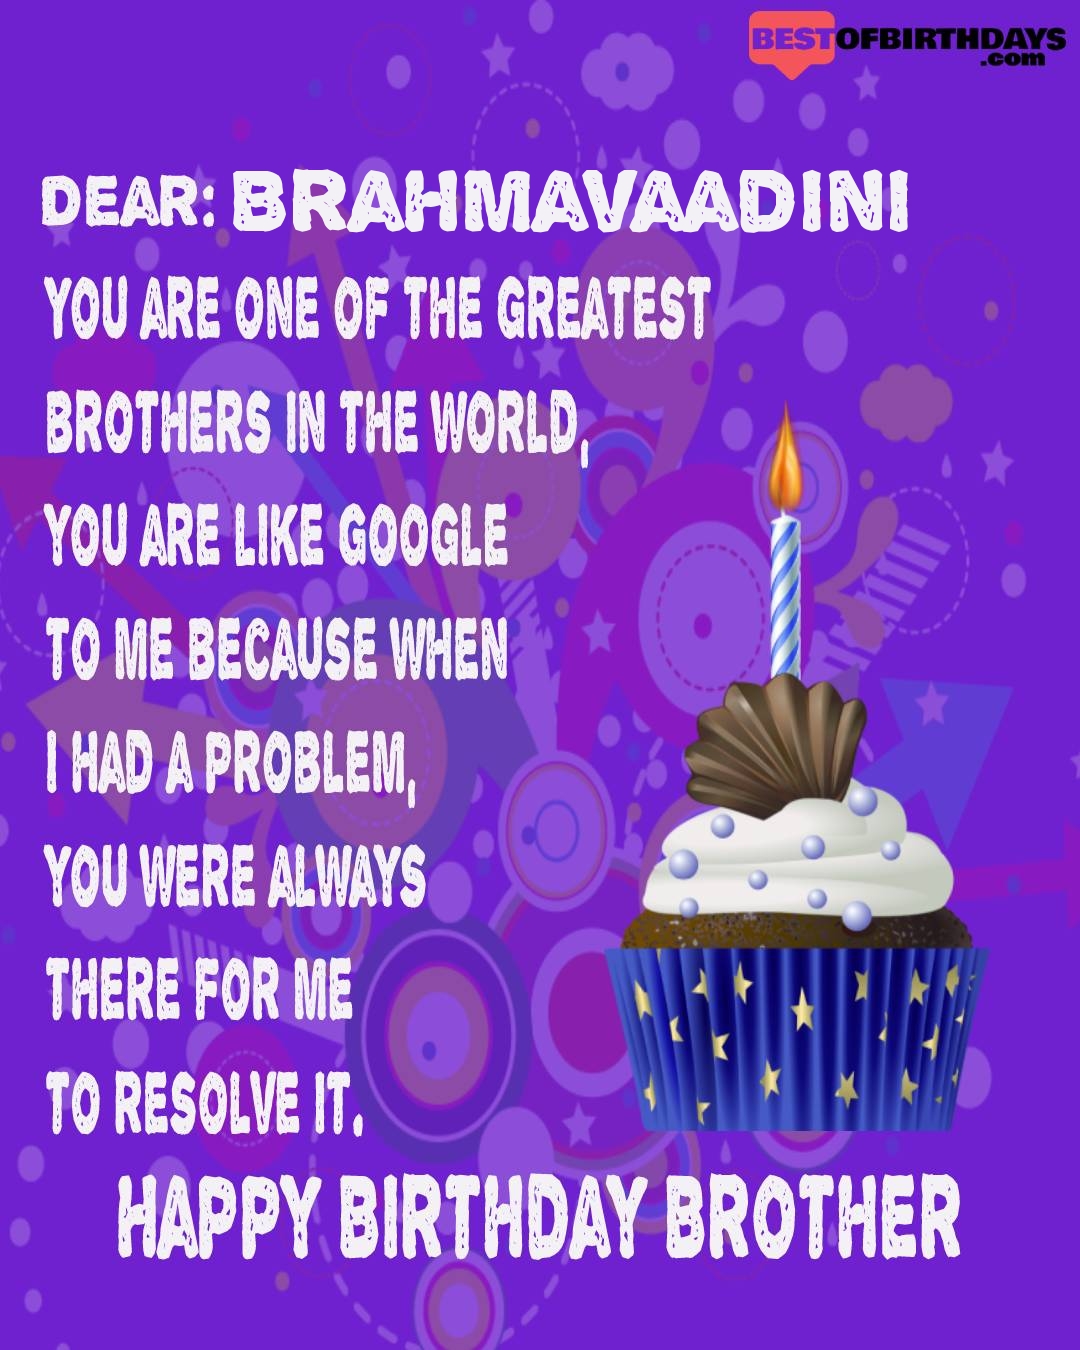 Happy birthday brahmavaadini bhai brother bro